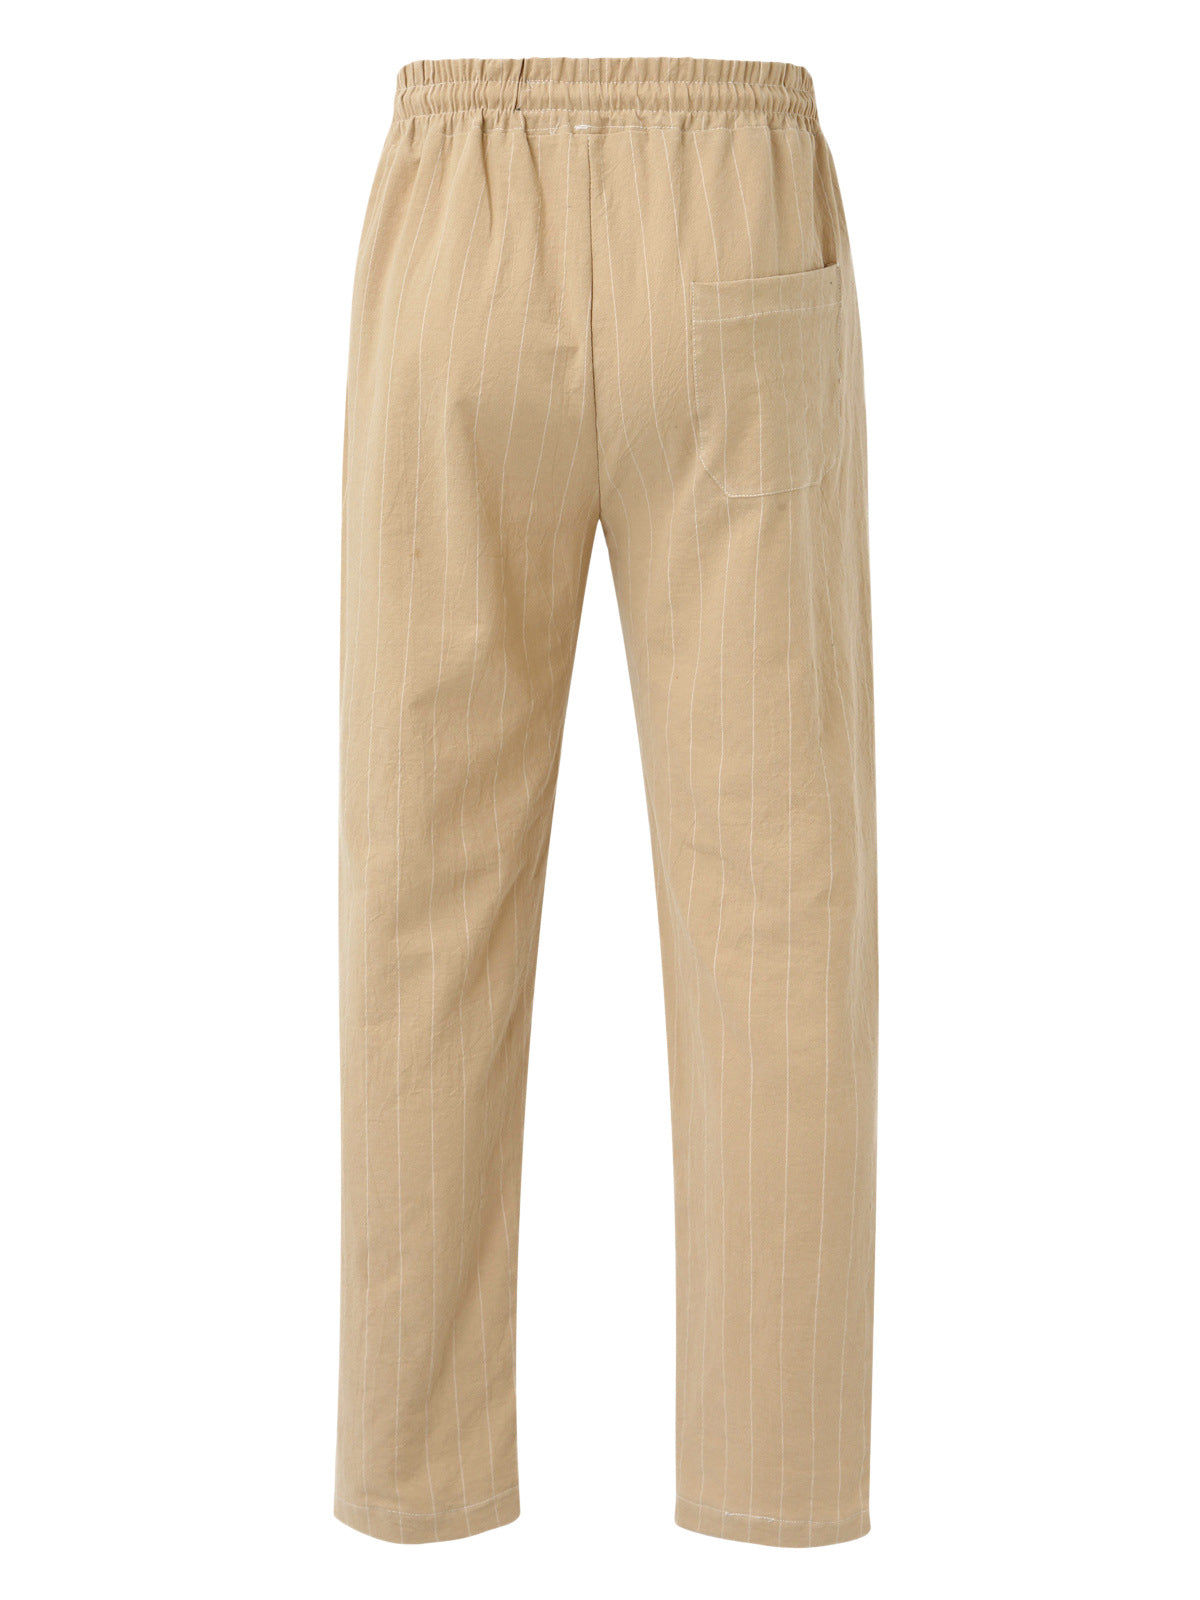 Men's Vertical Striped Tie Elastic Waist Cotton And Linen Beach Pants Casual Trousers